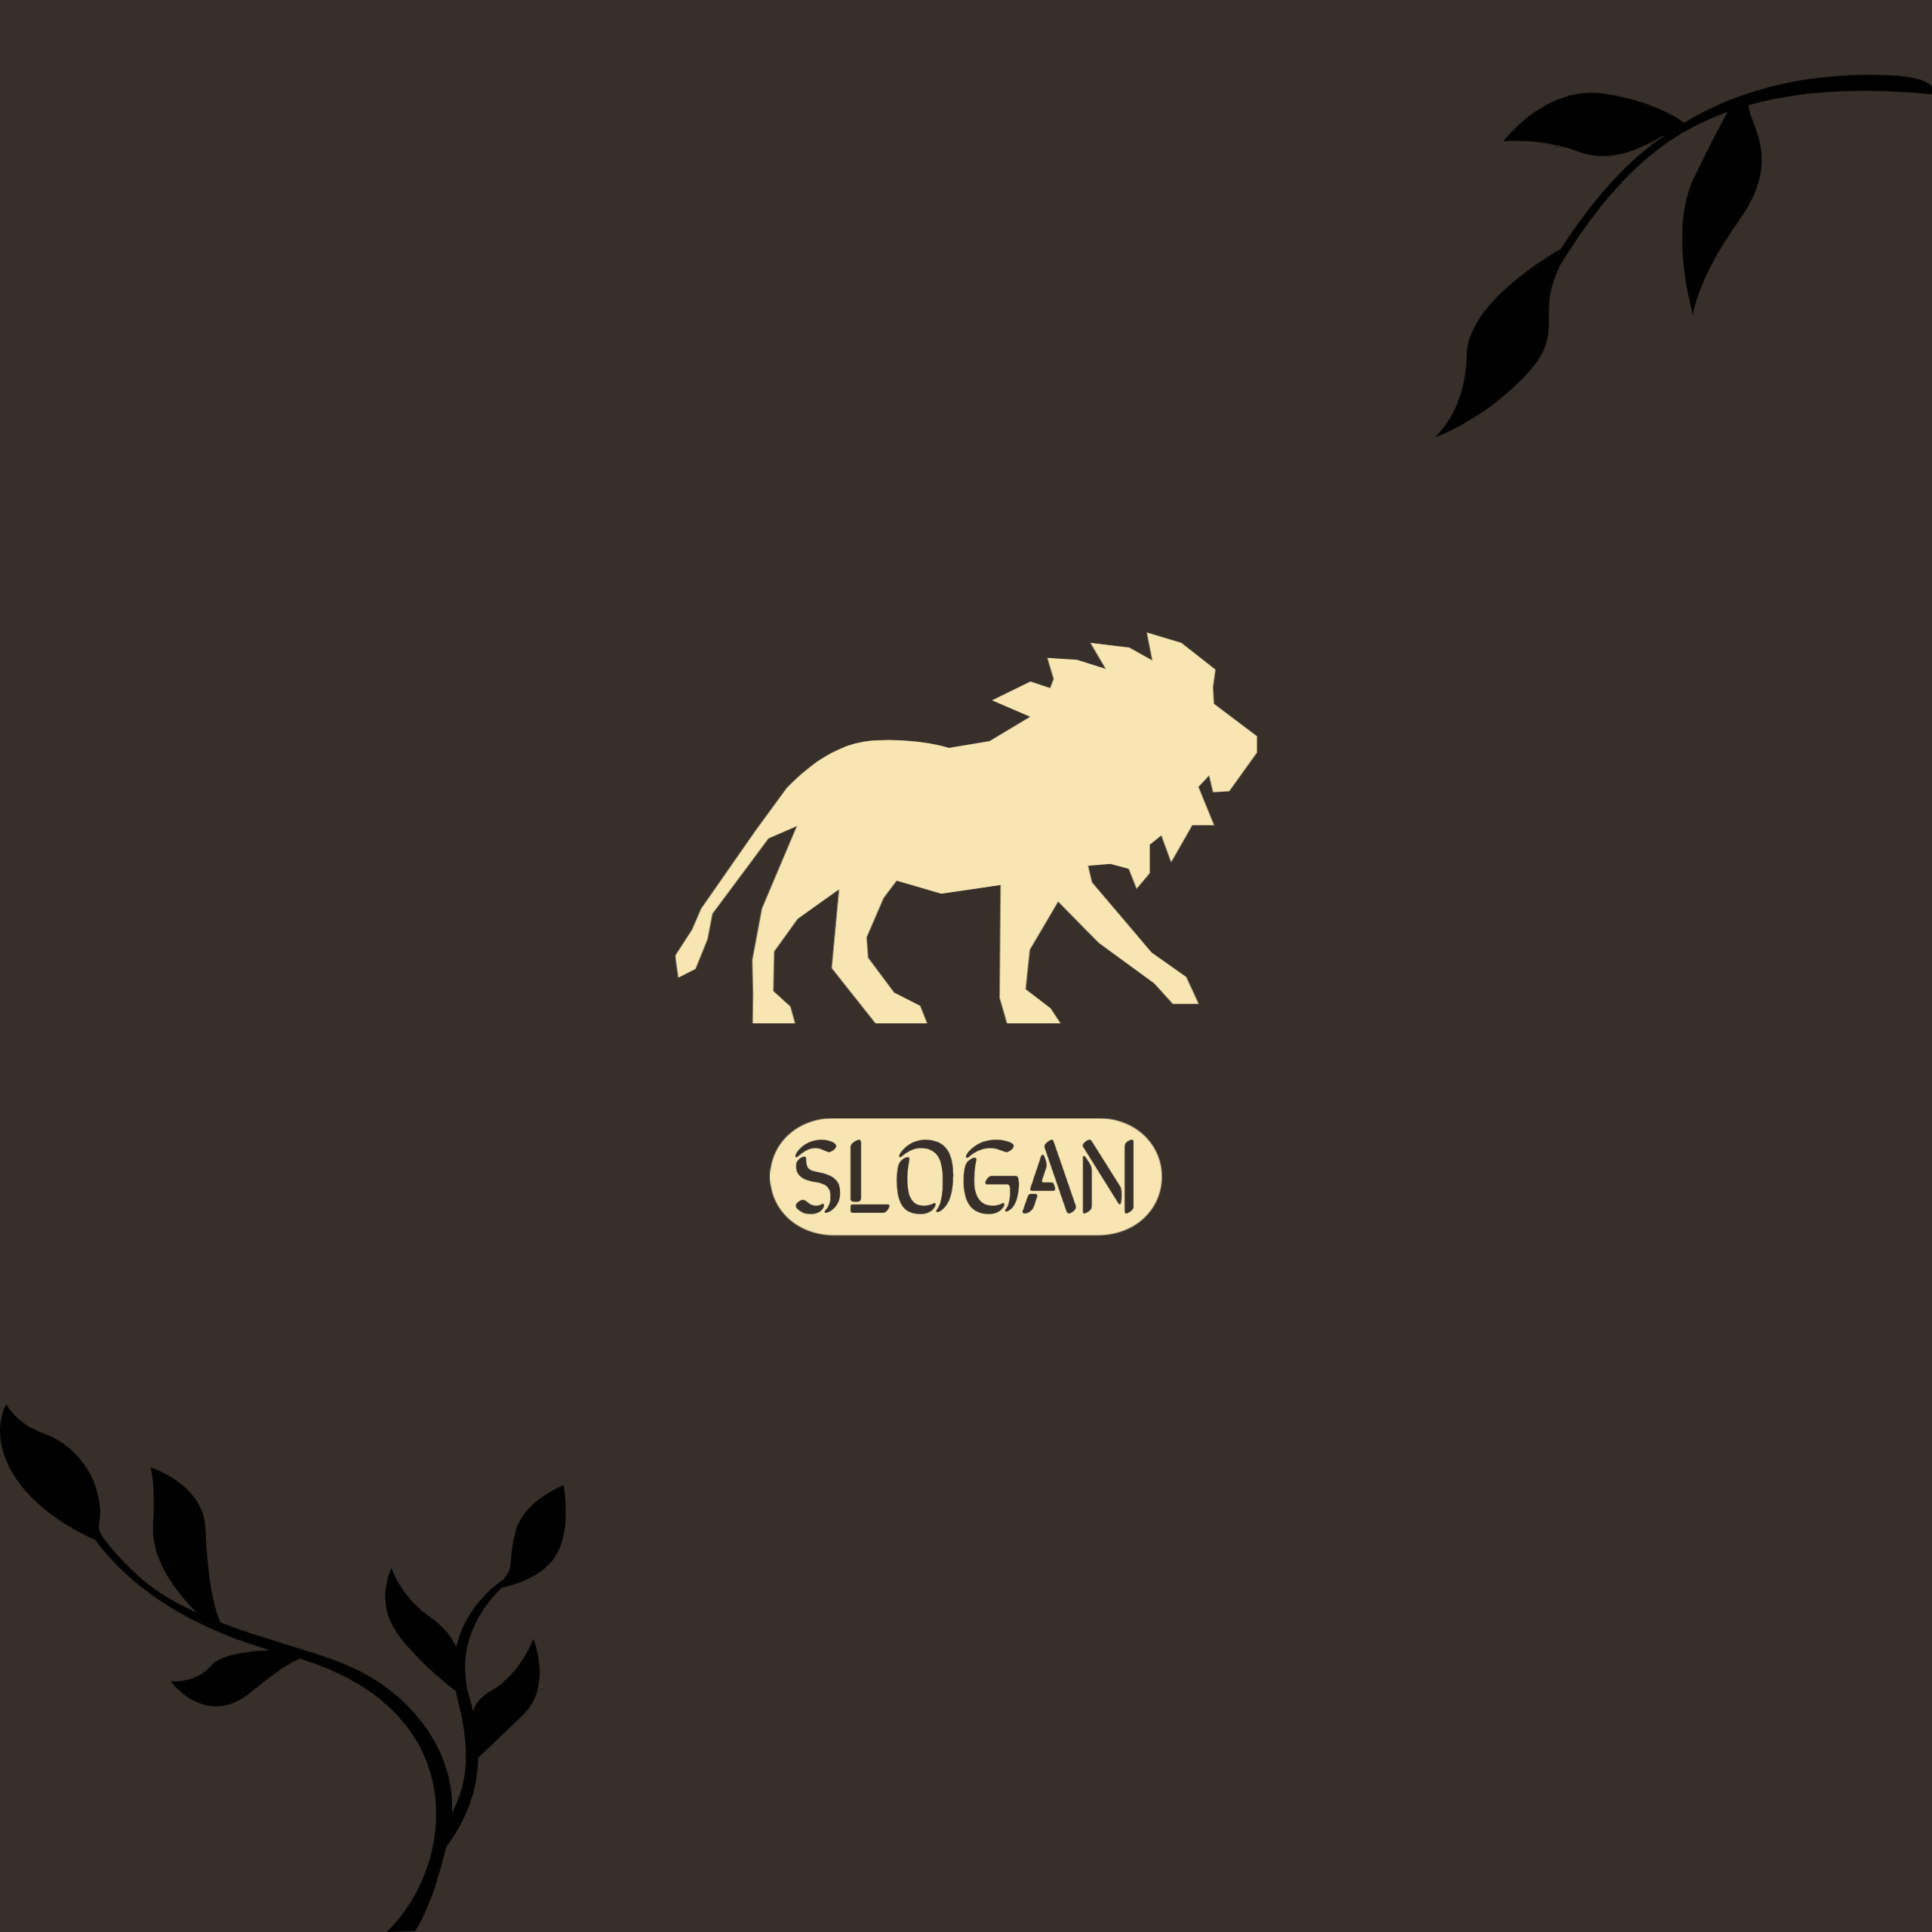 Lion Creative Minimal Logos 3 Templates